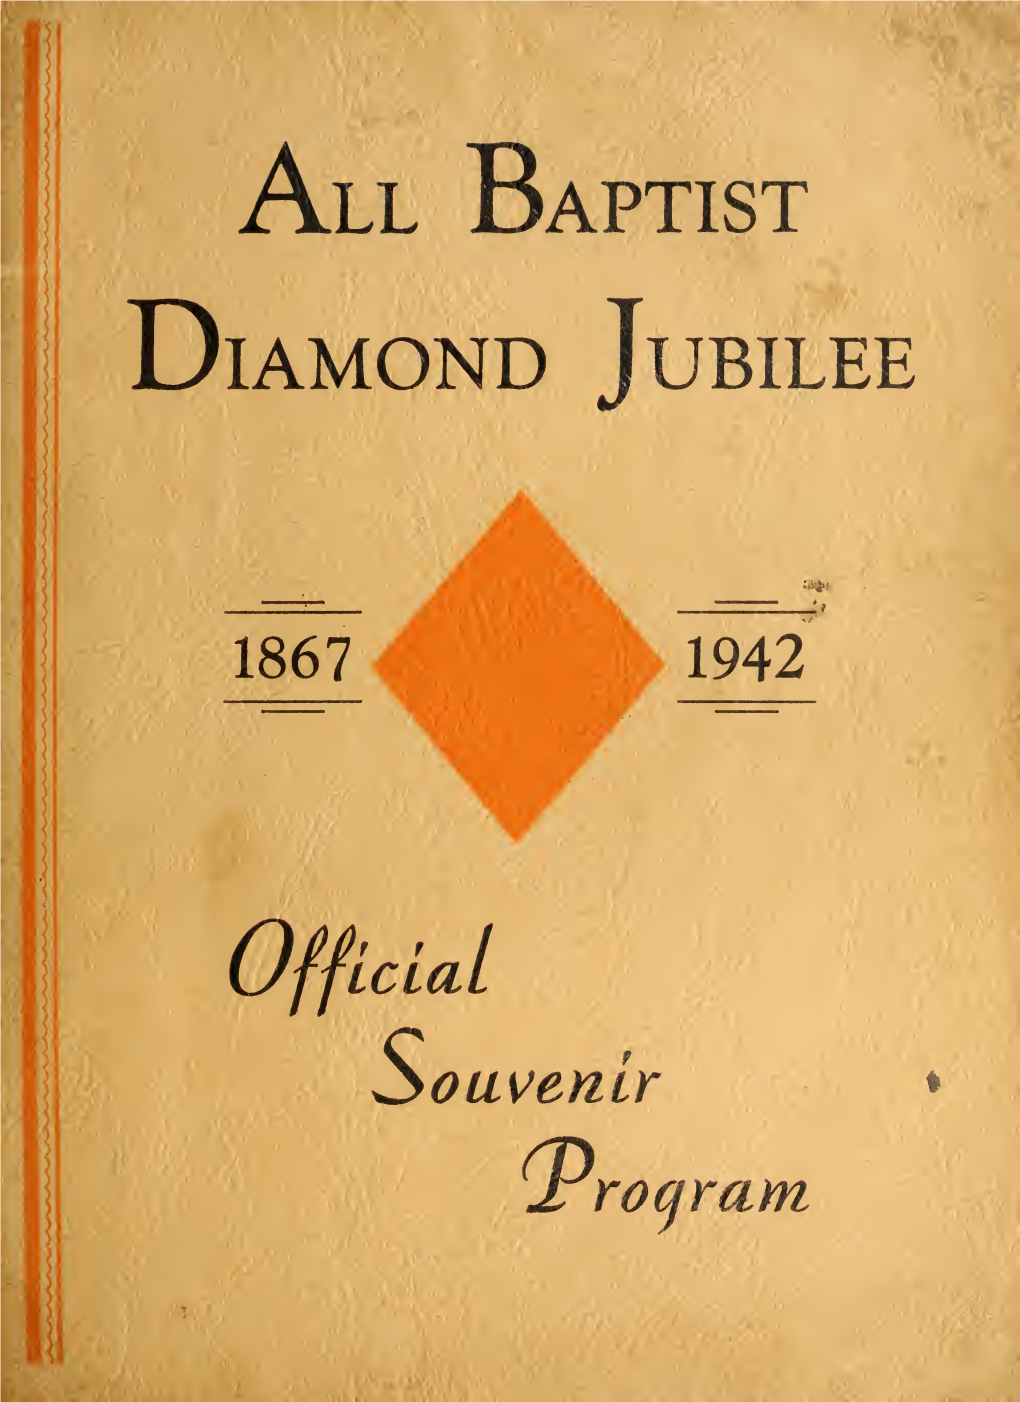 All Baptist Diamond Jublilee Program